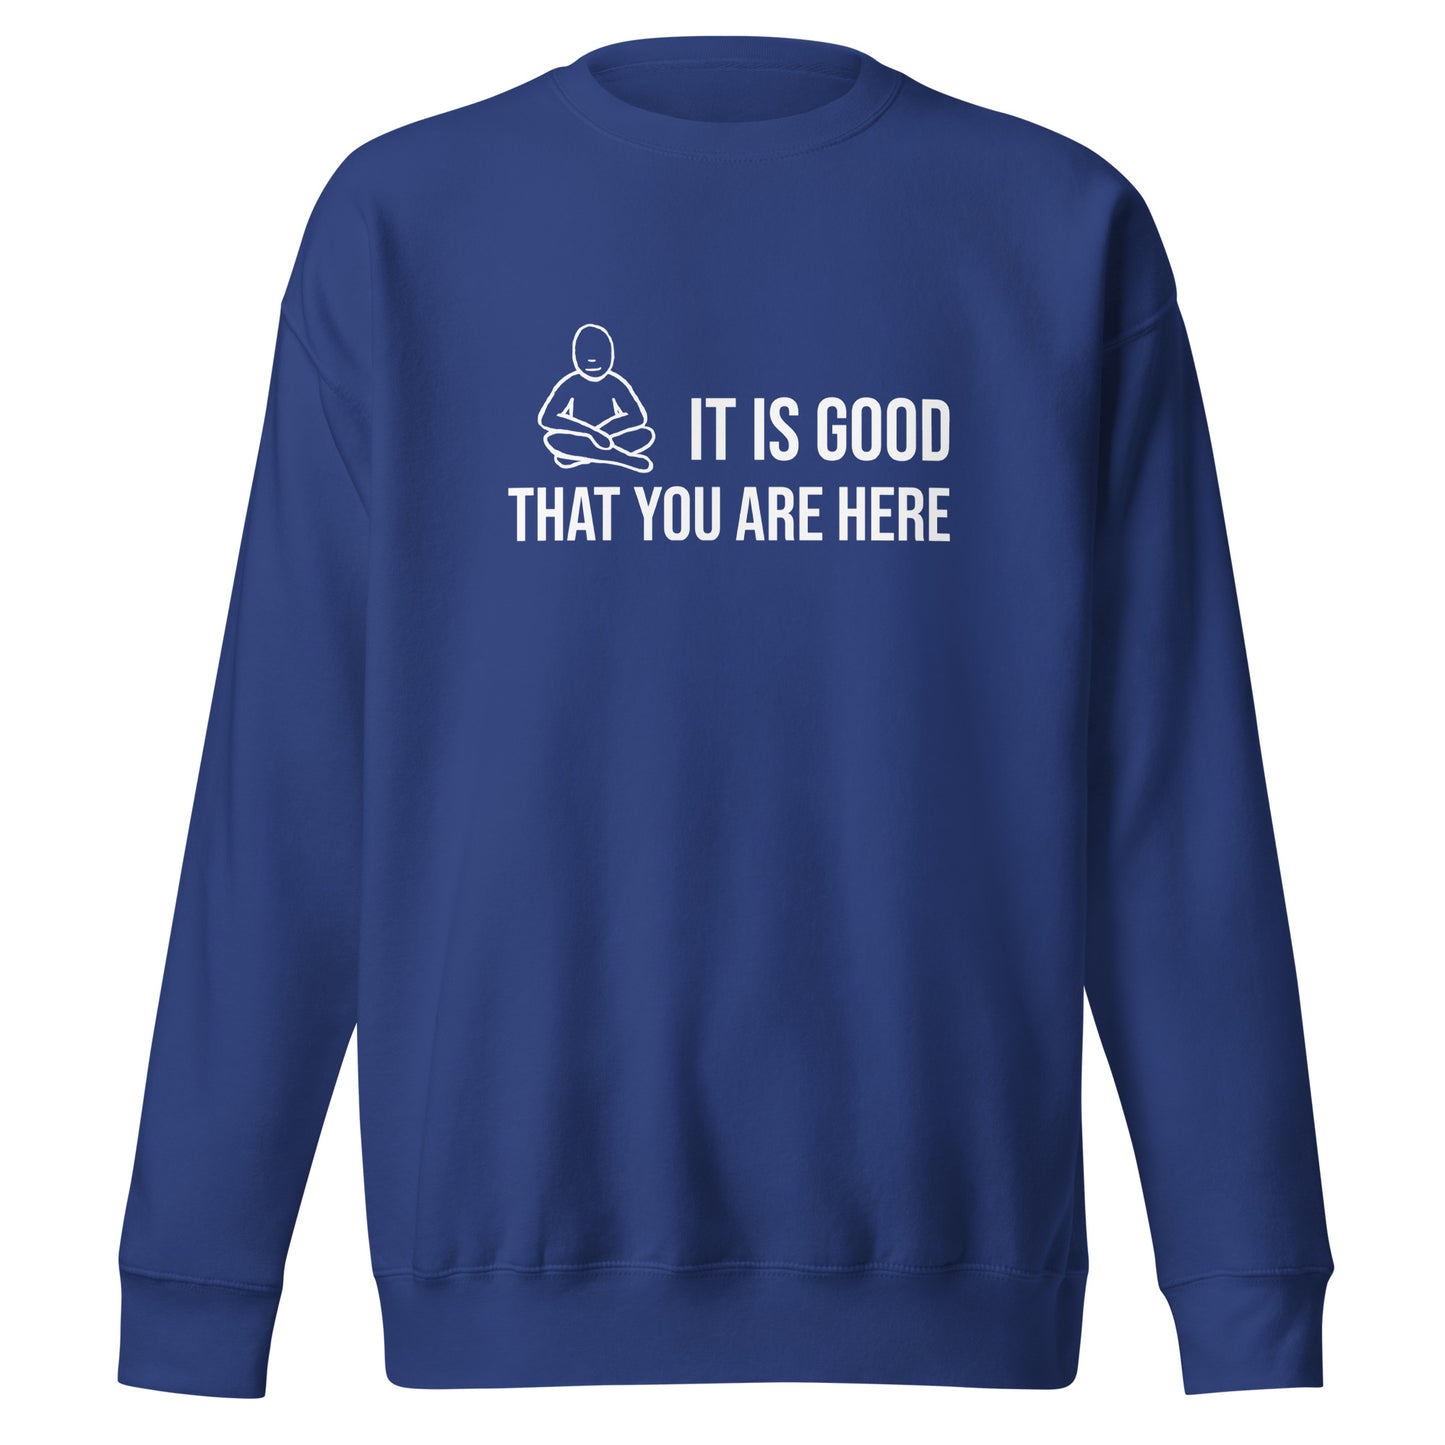 "It Is Good" White Text - Unisex Premium Sweatshirt